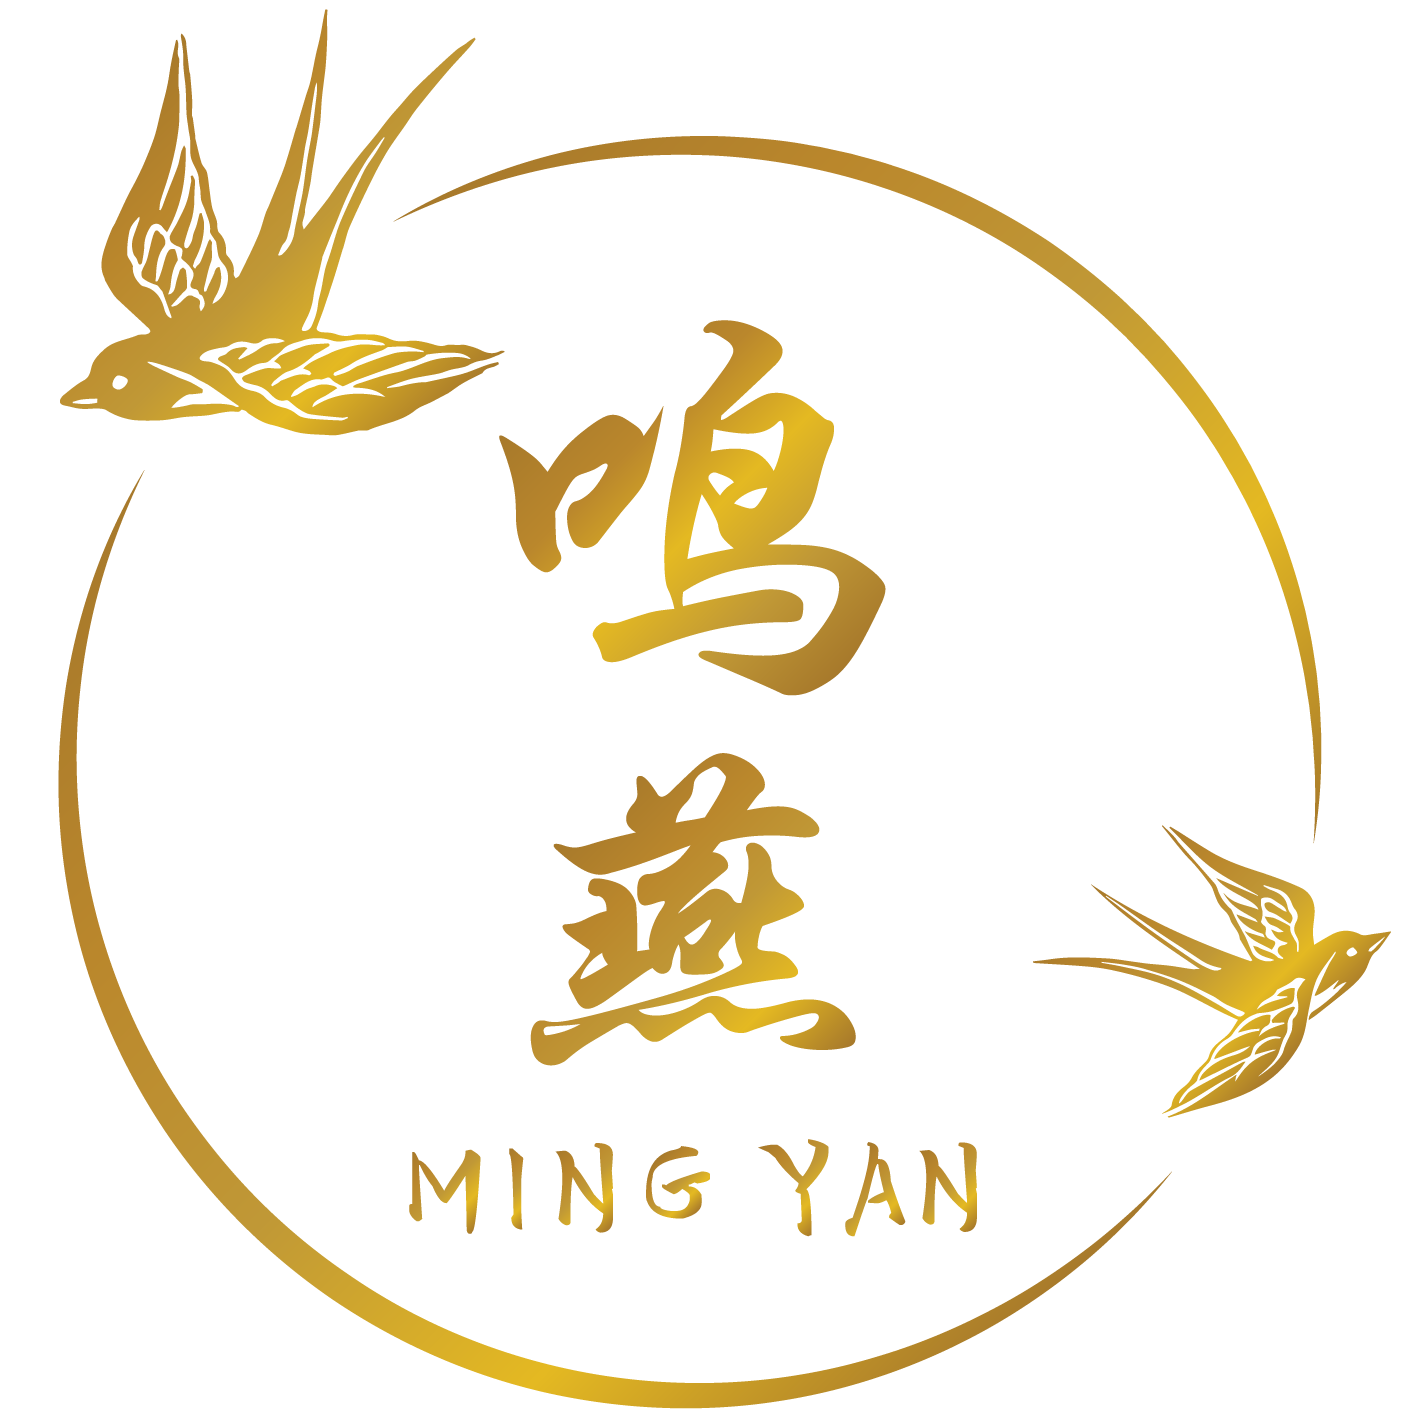 Ming Yan